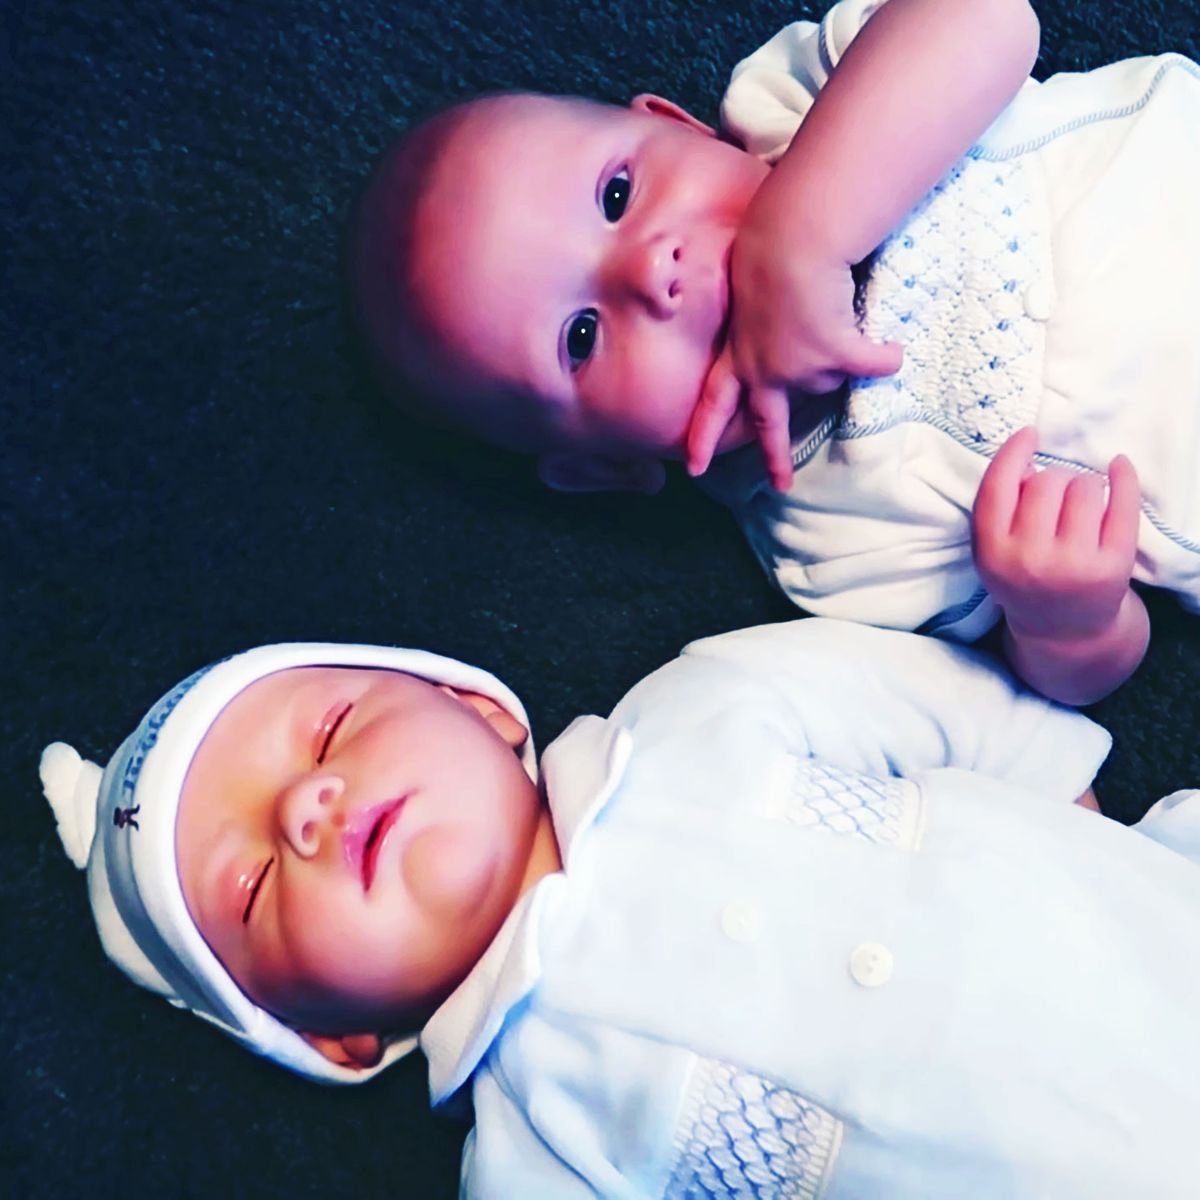 baby clone doll